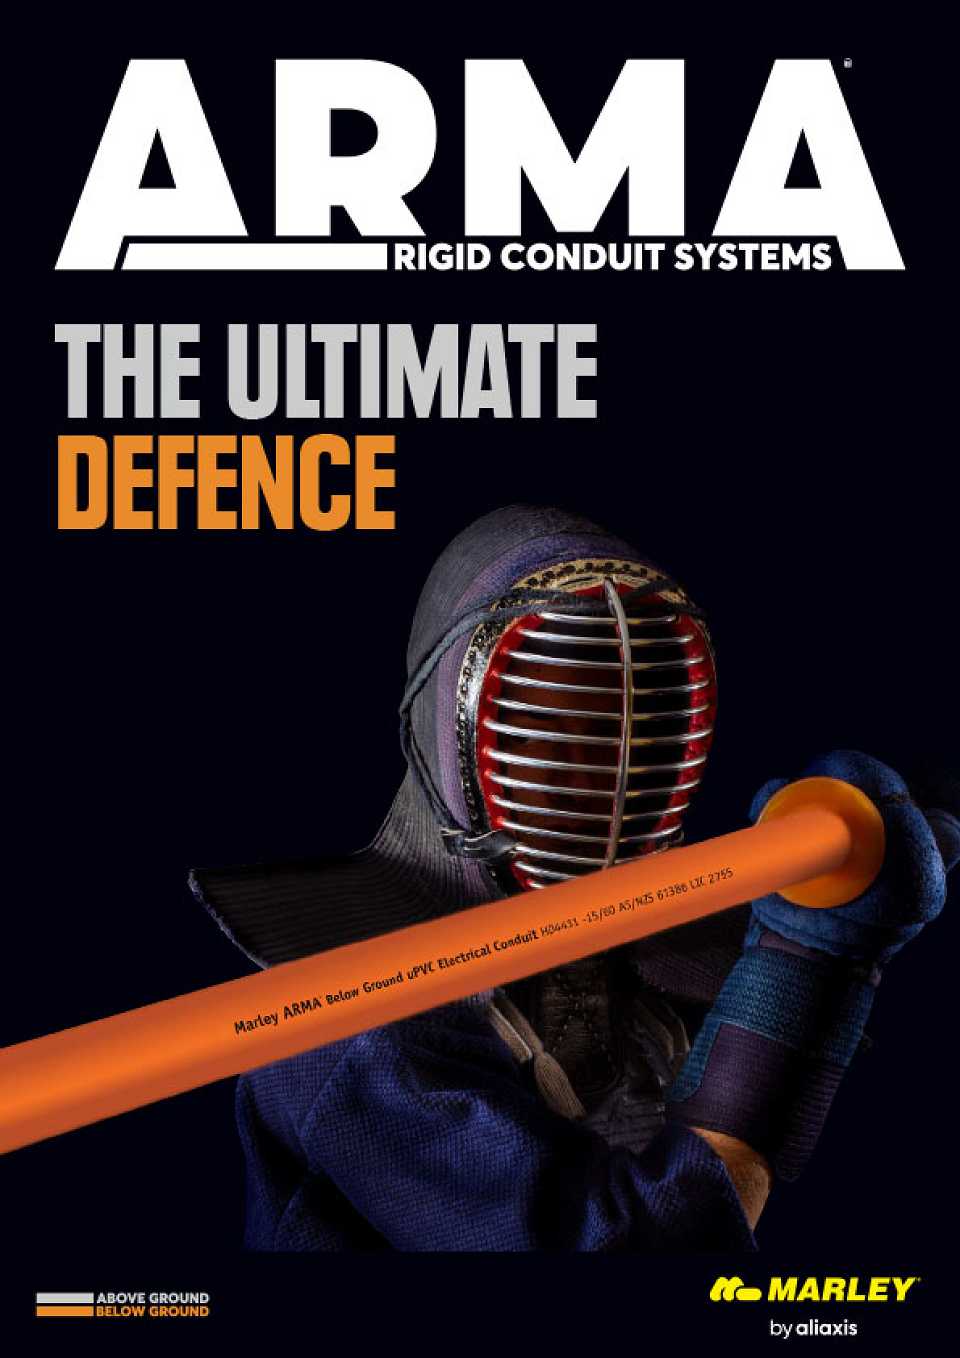 ARMA Rigid Conduit Systems Catalogue Cover